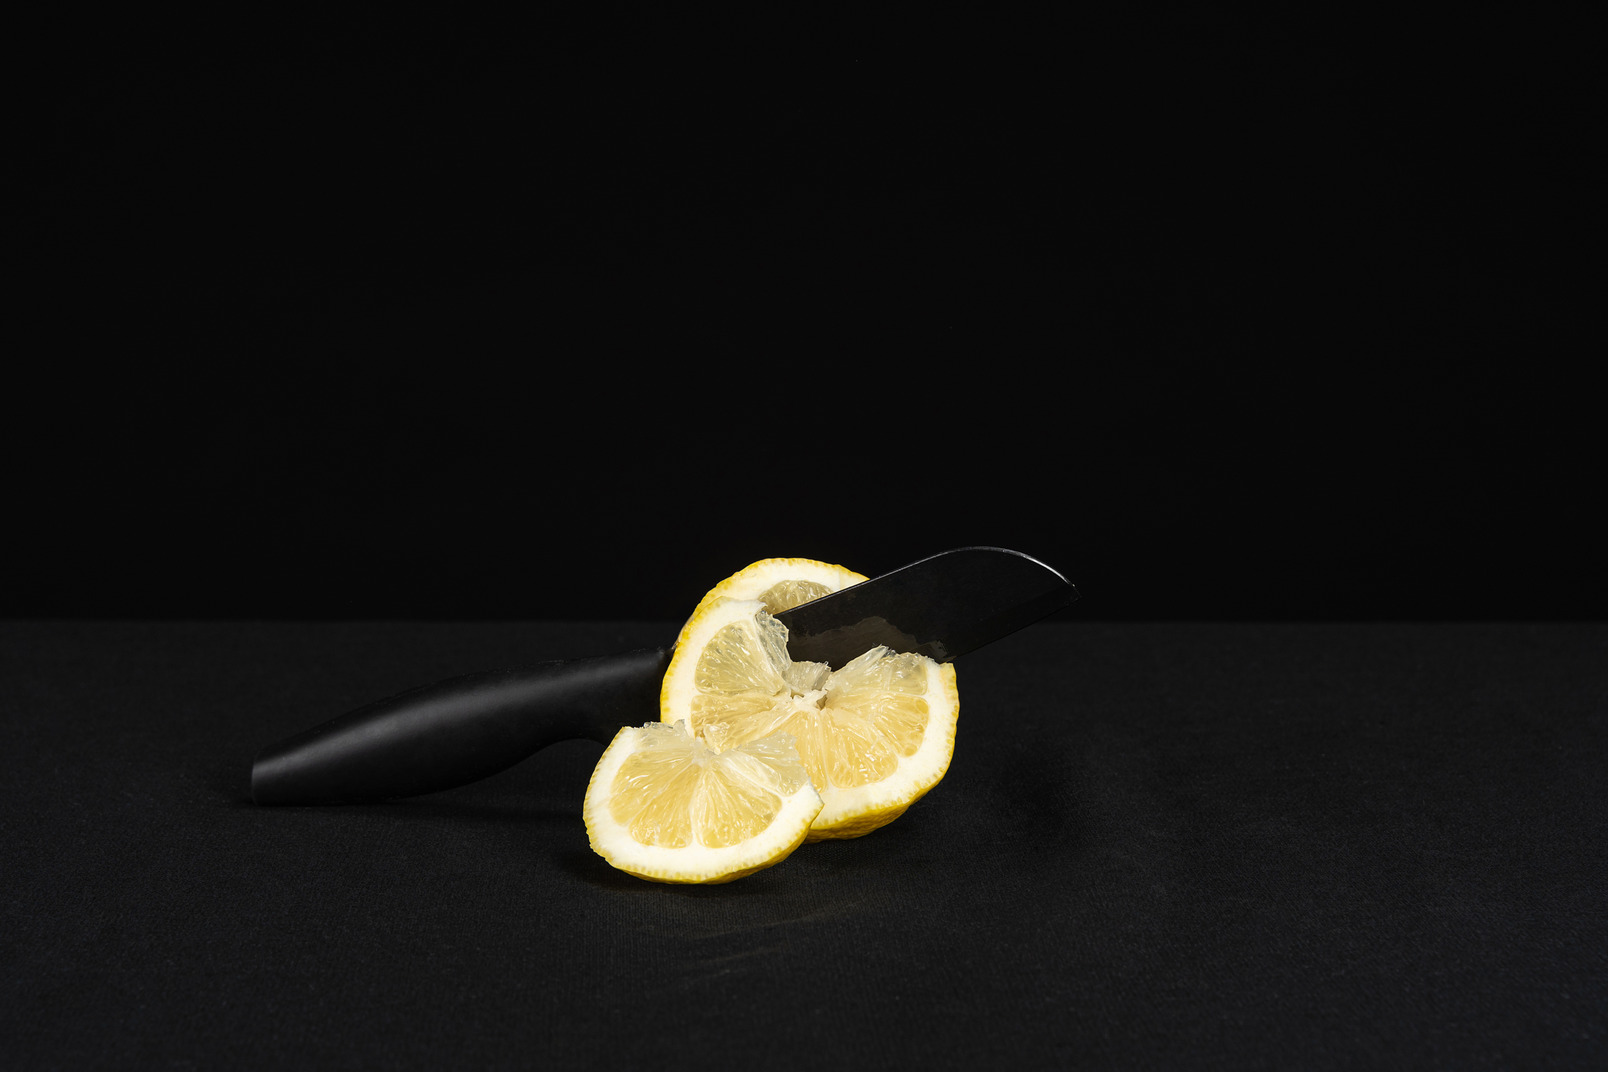 Knife cutting lemon in black background